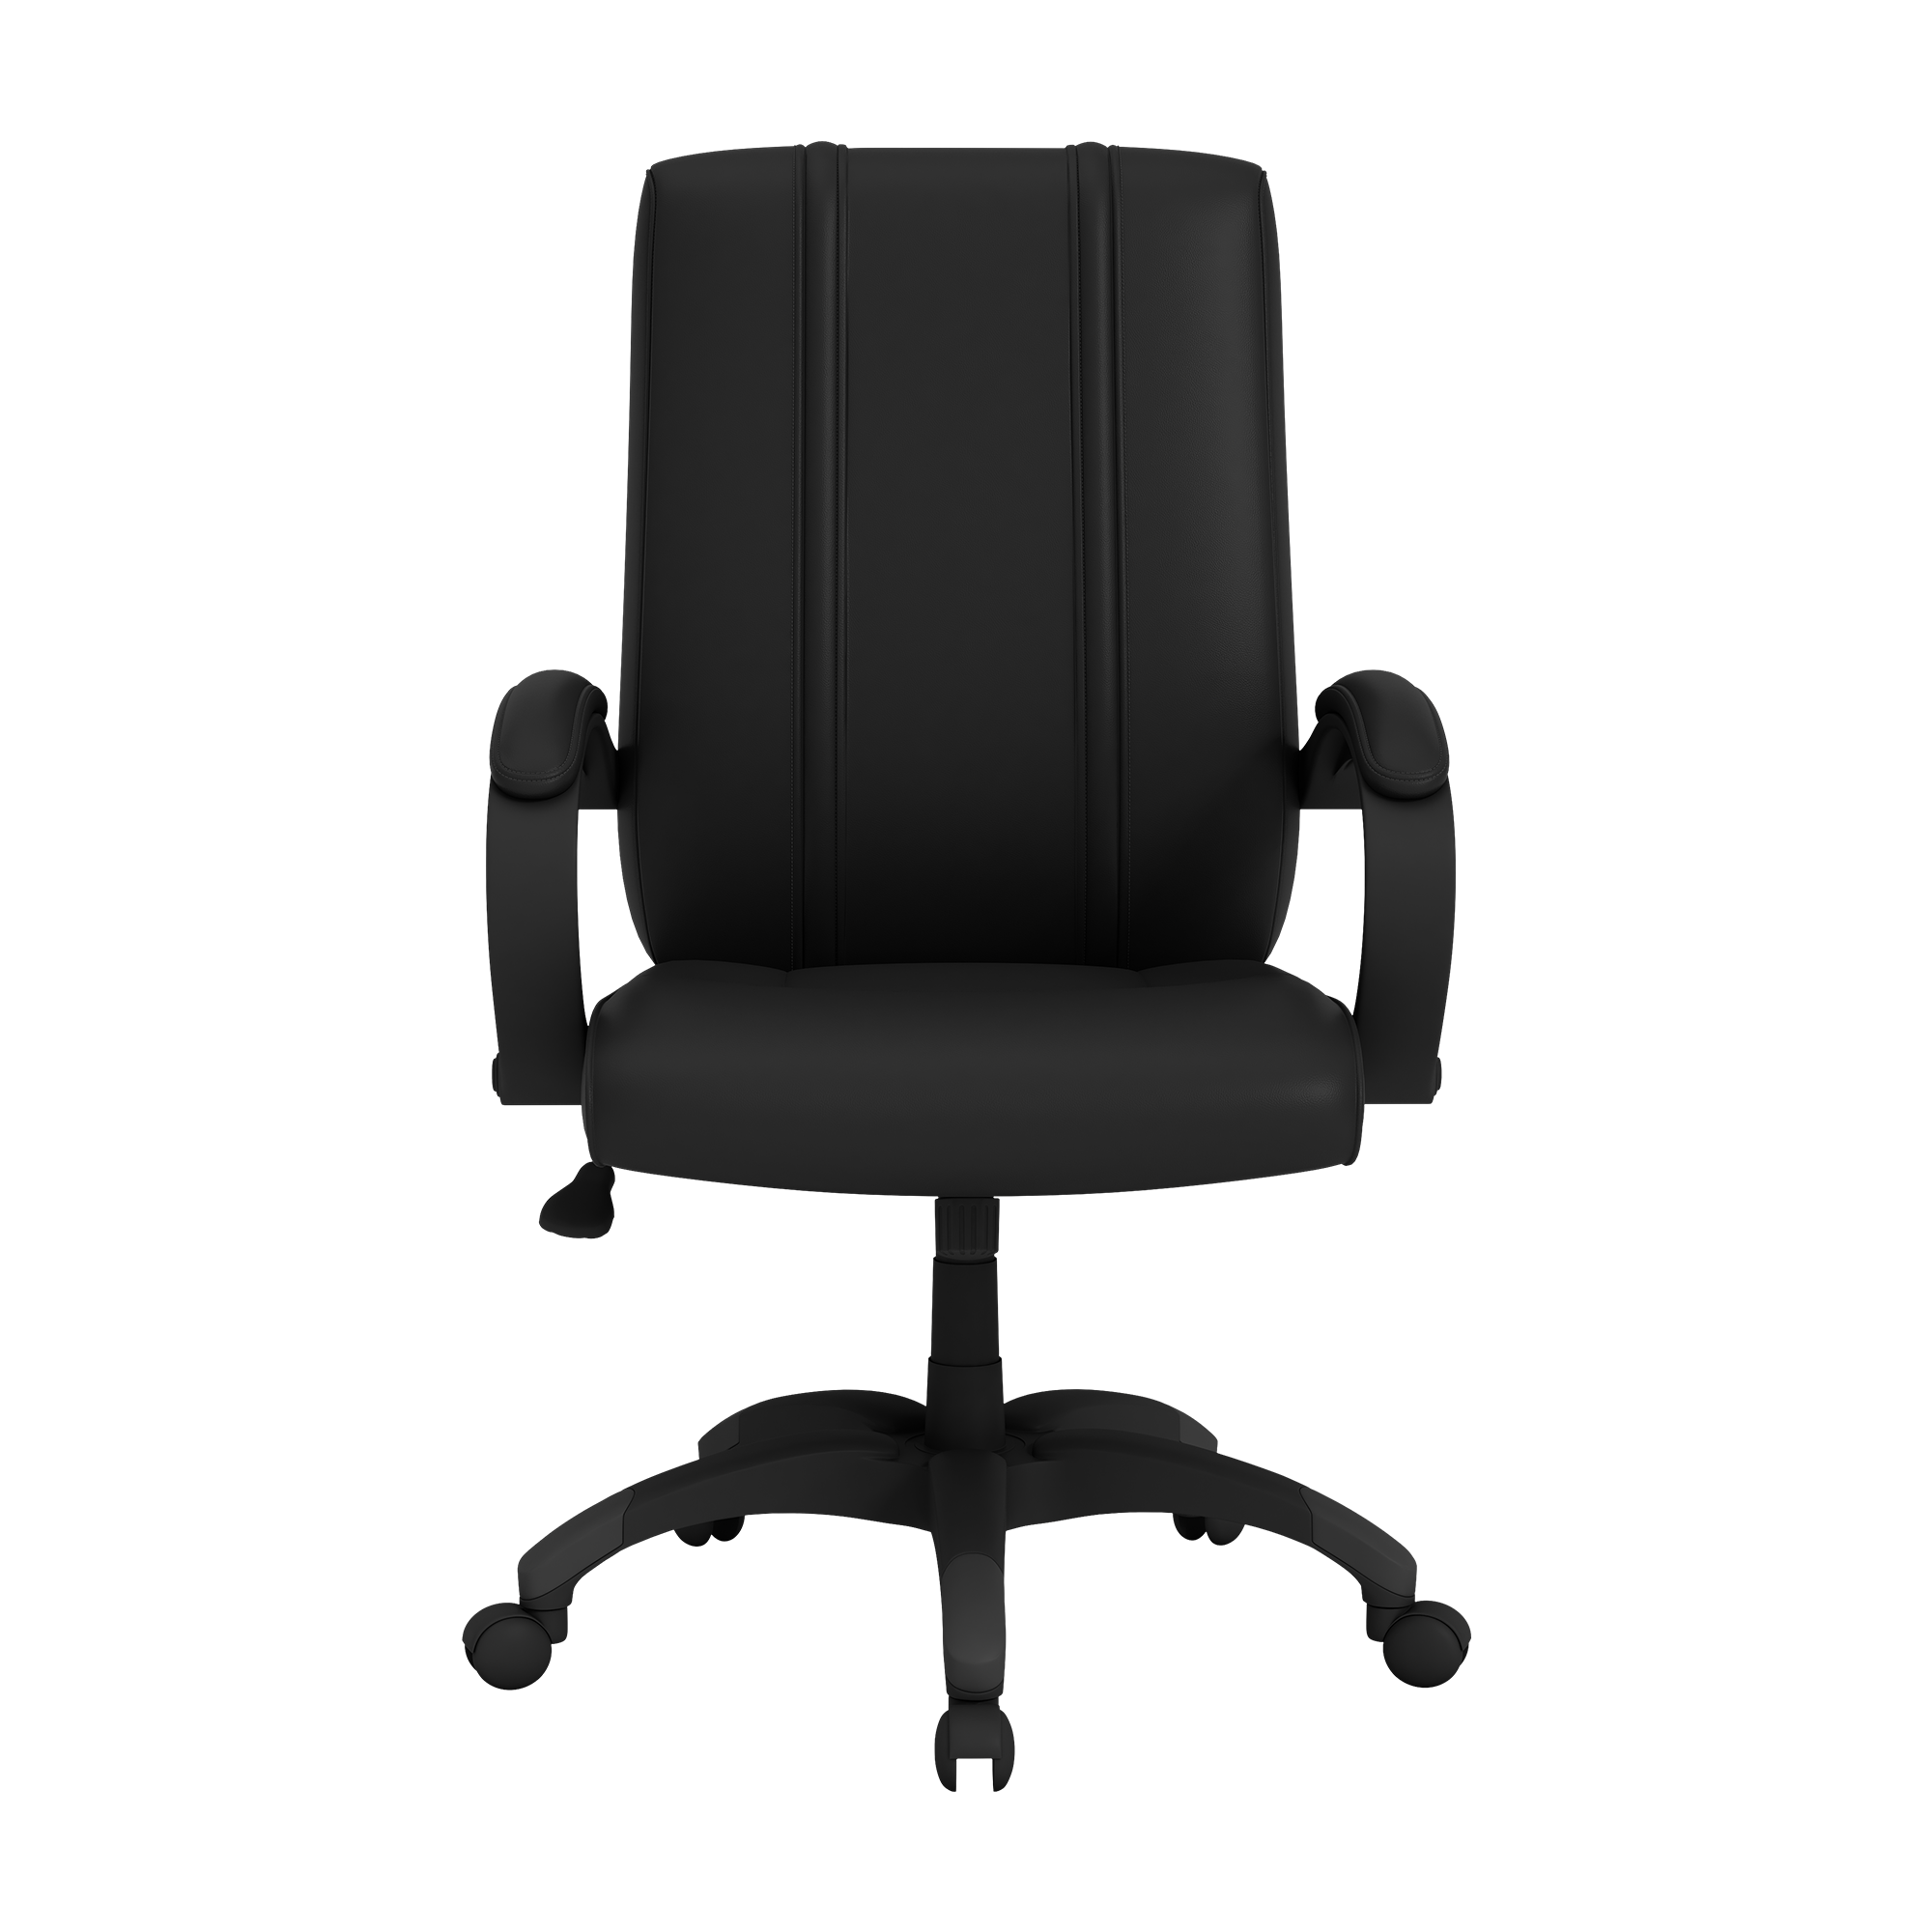 Office Chair 1000 with  Dallas Cowboys Helmet Logo